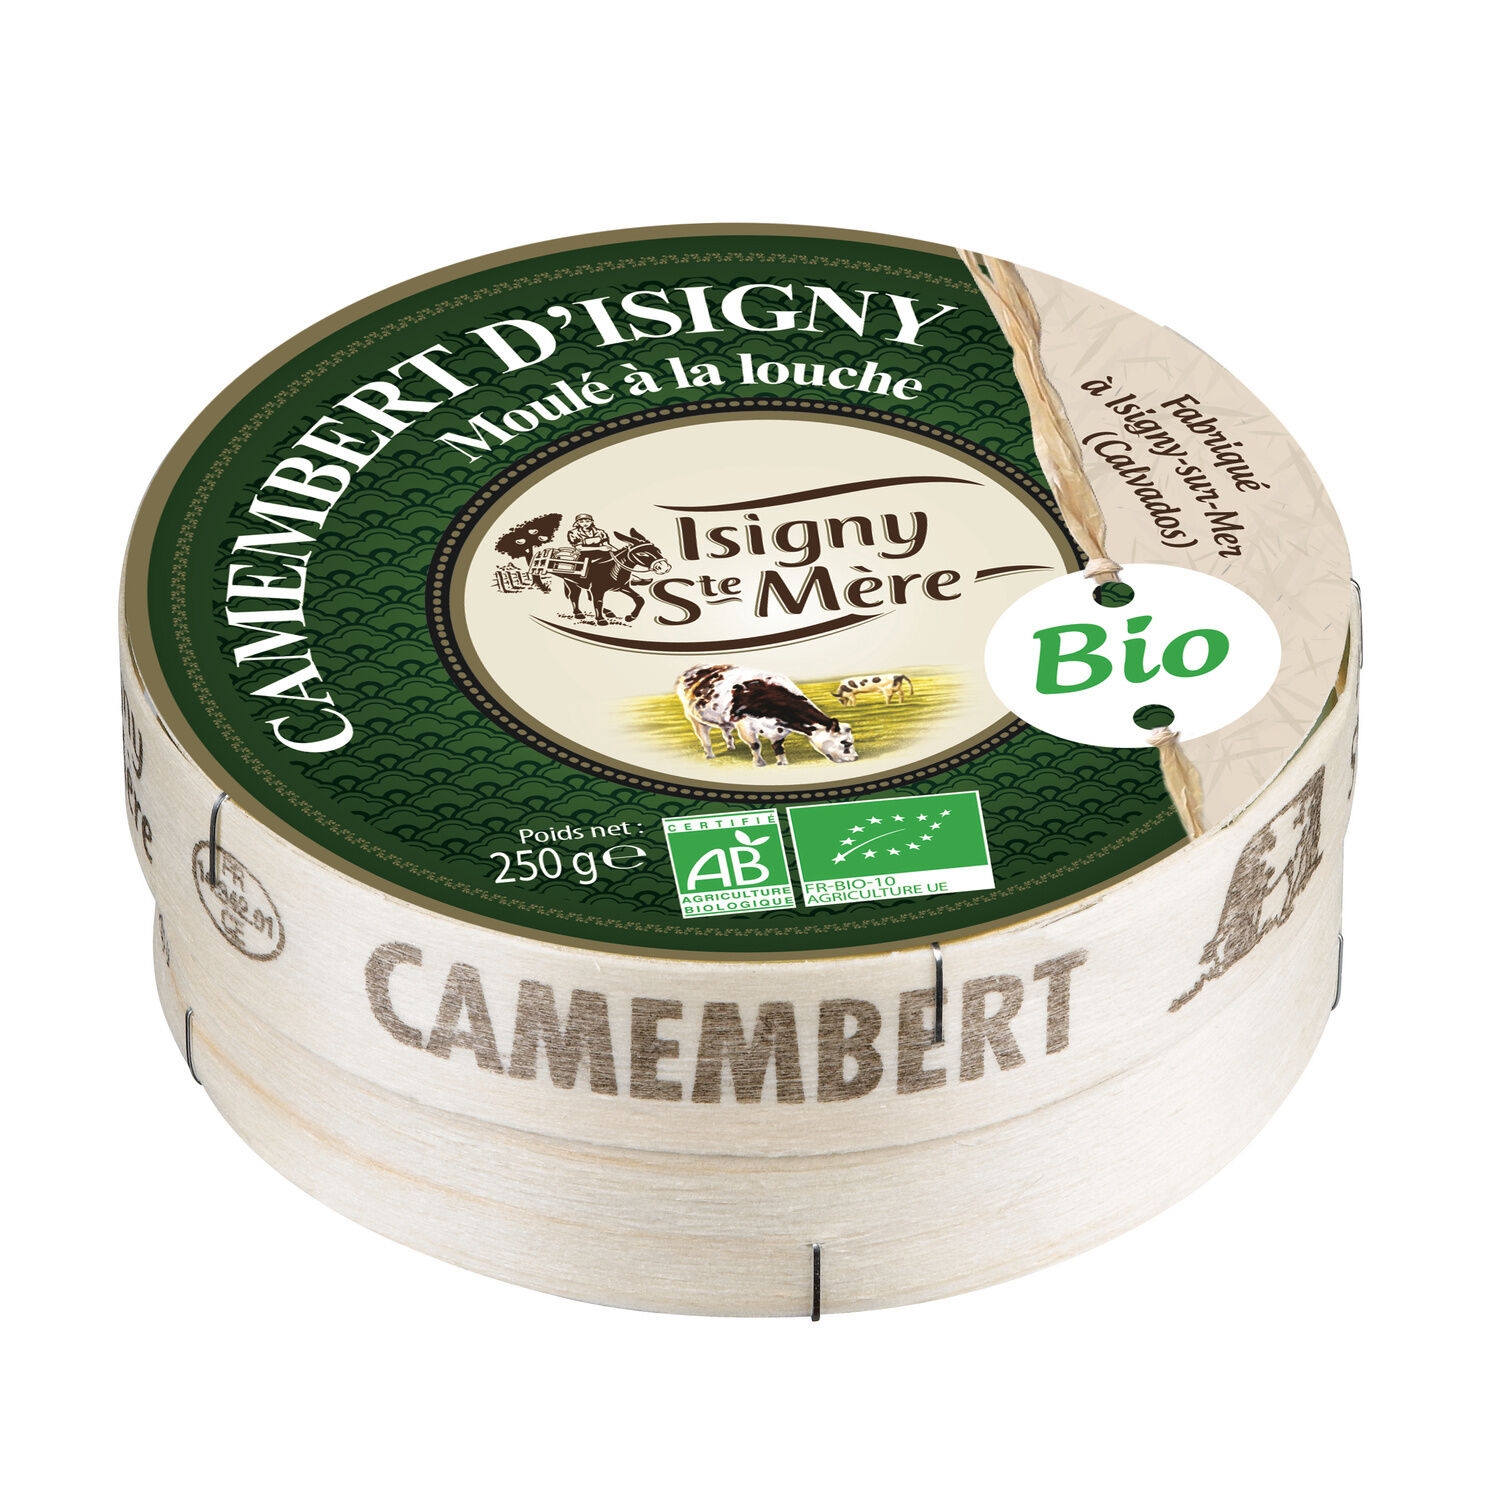 Camembert Bio Disigny Isigny Sainte Mere Le Fromage De 250g à Prix Carrefour 